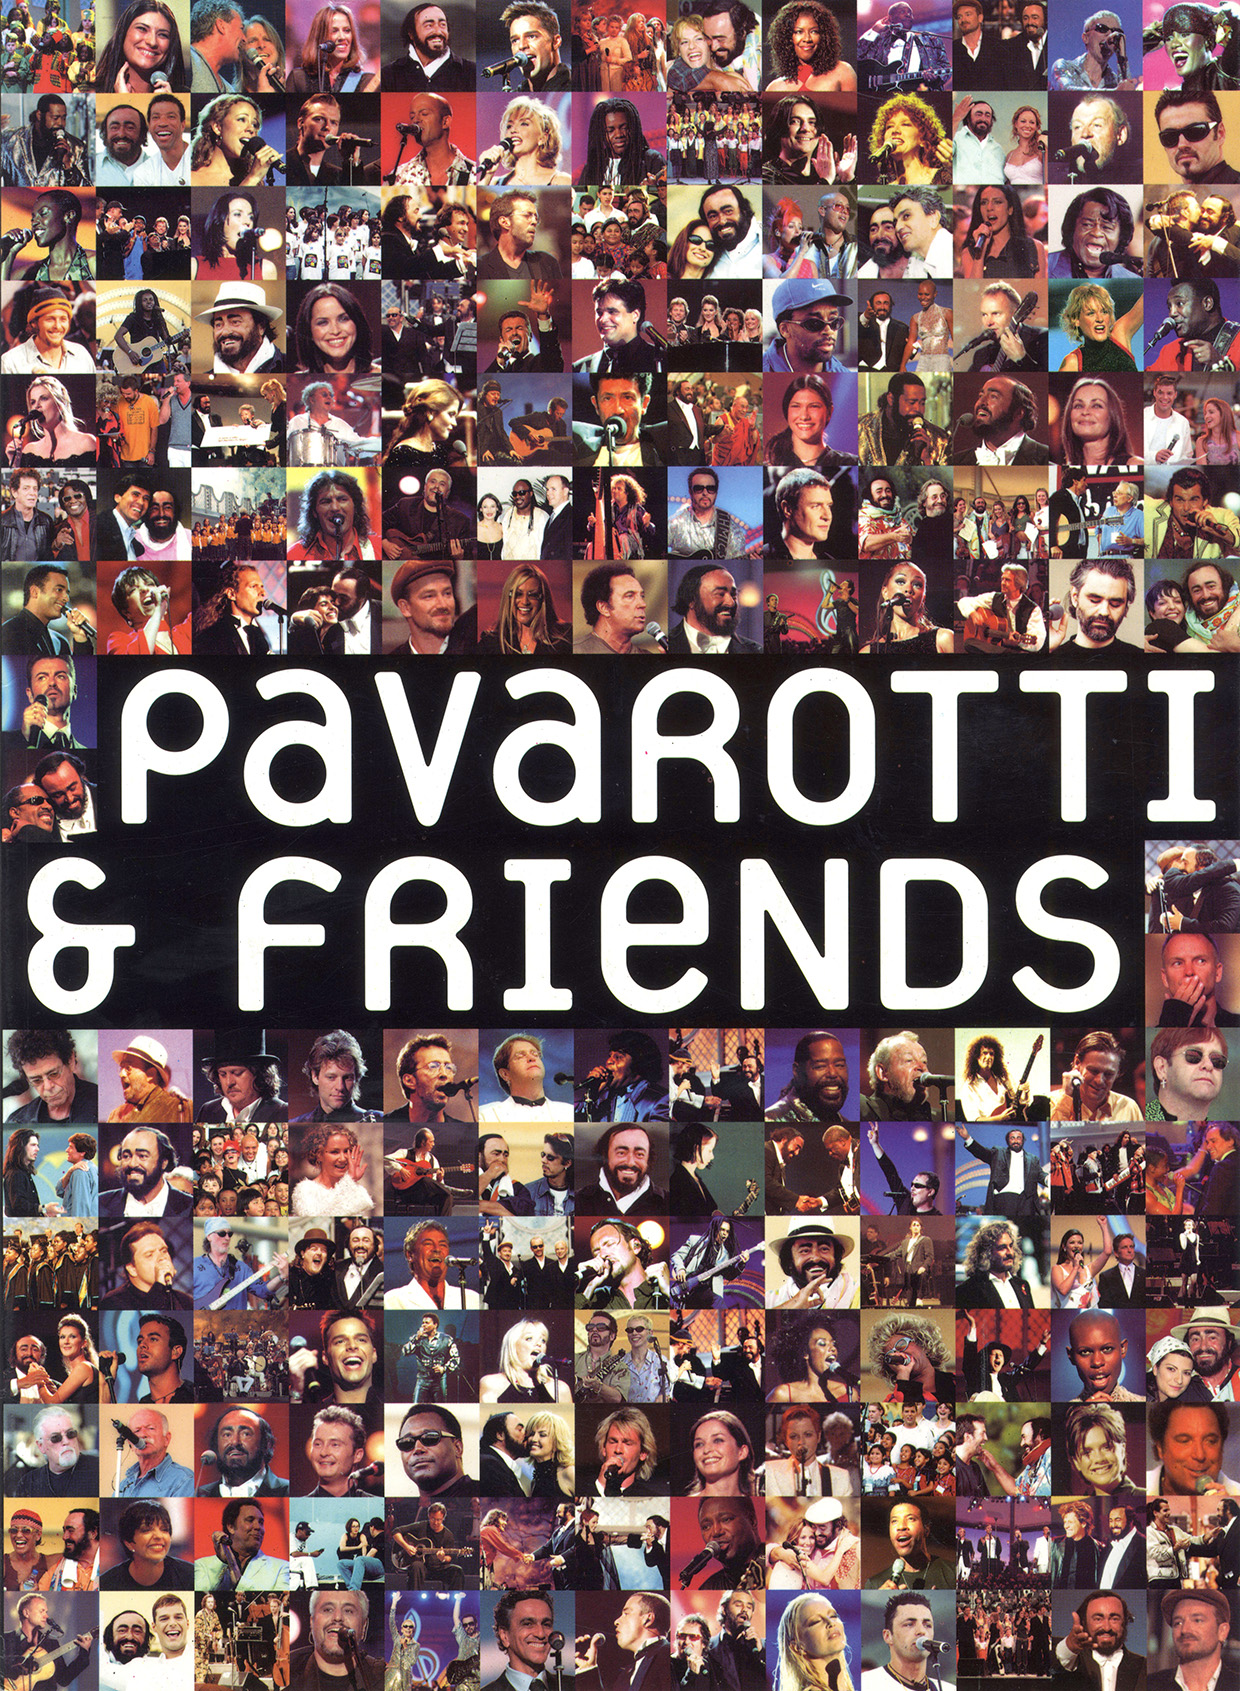 Pavarotti and Friends program (Italy)